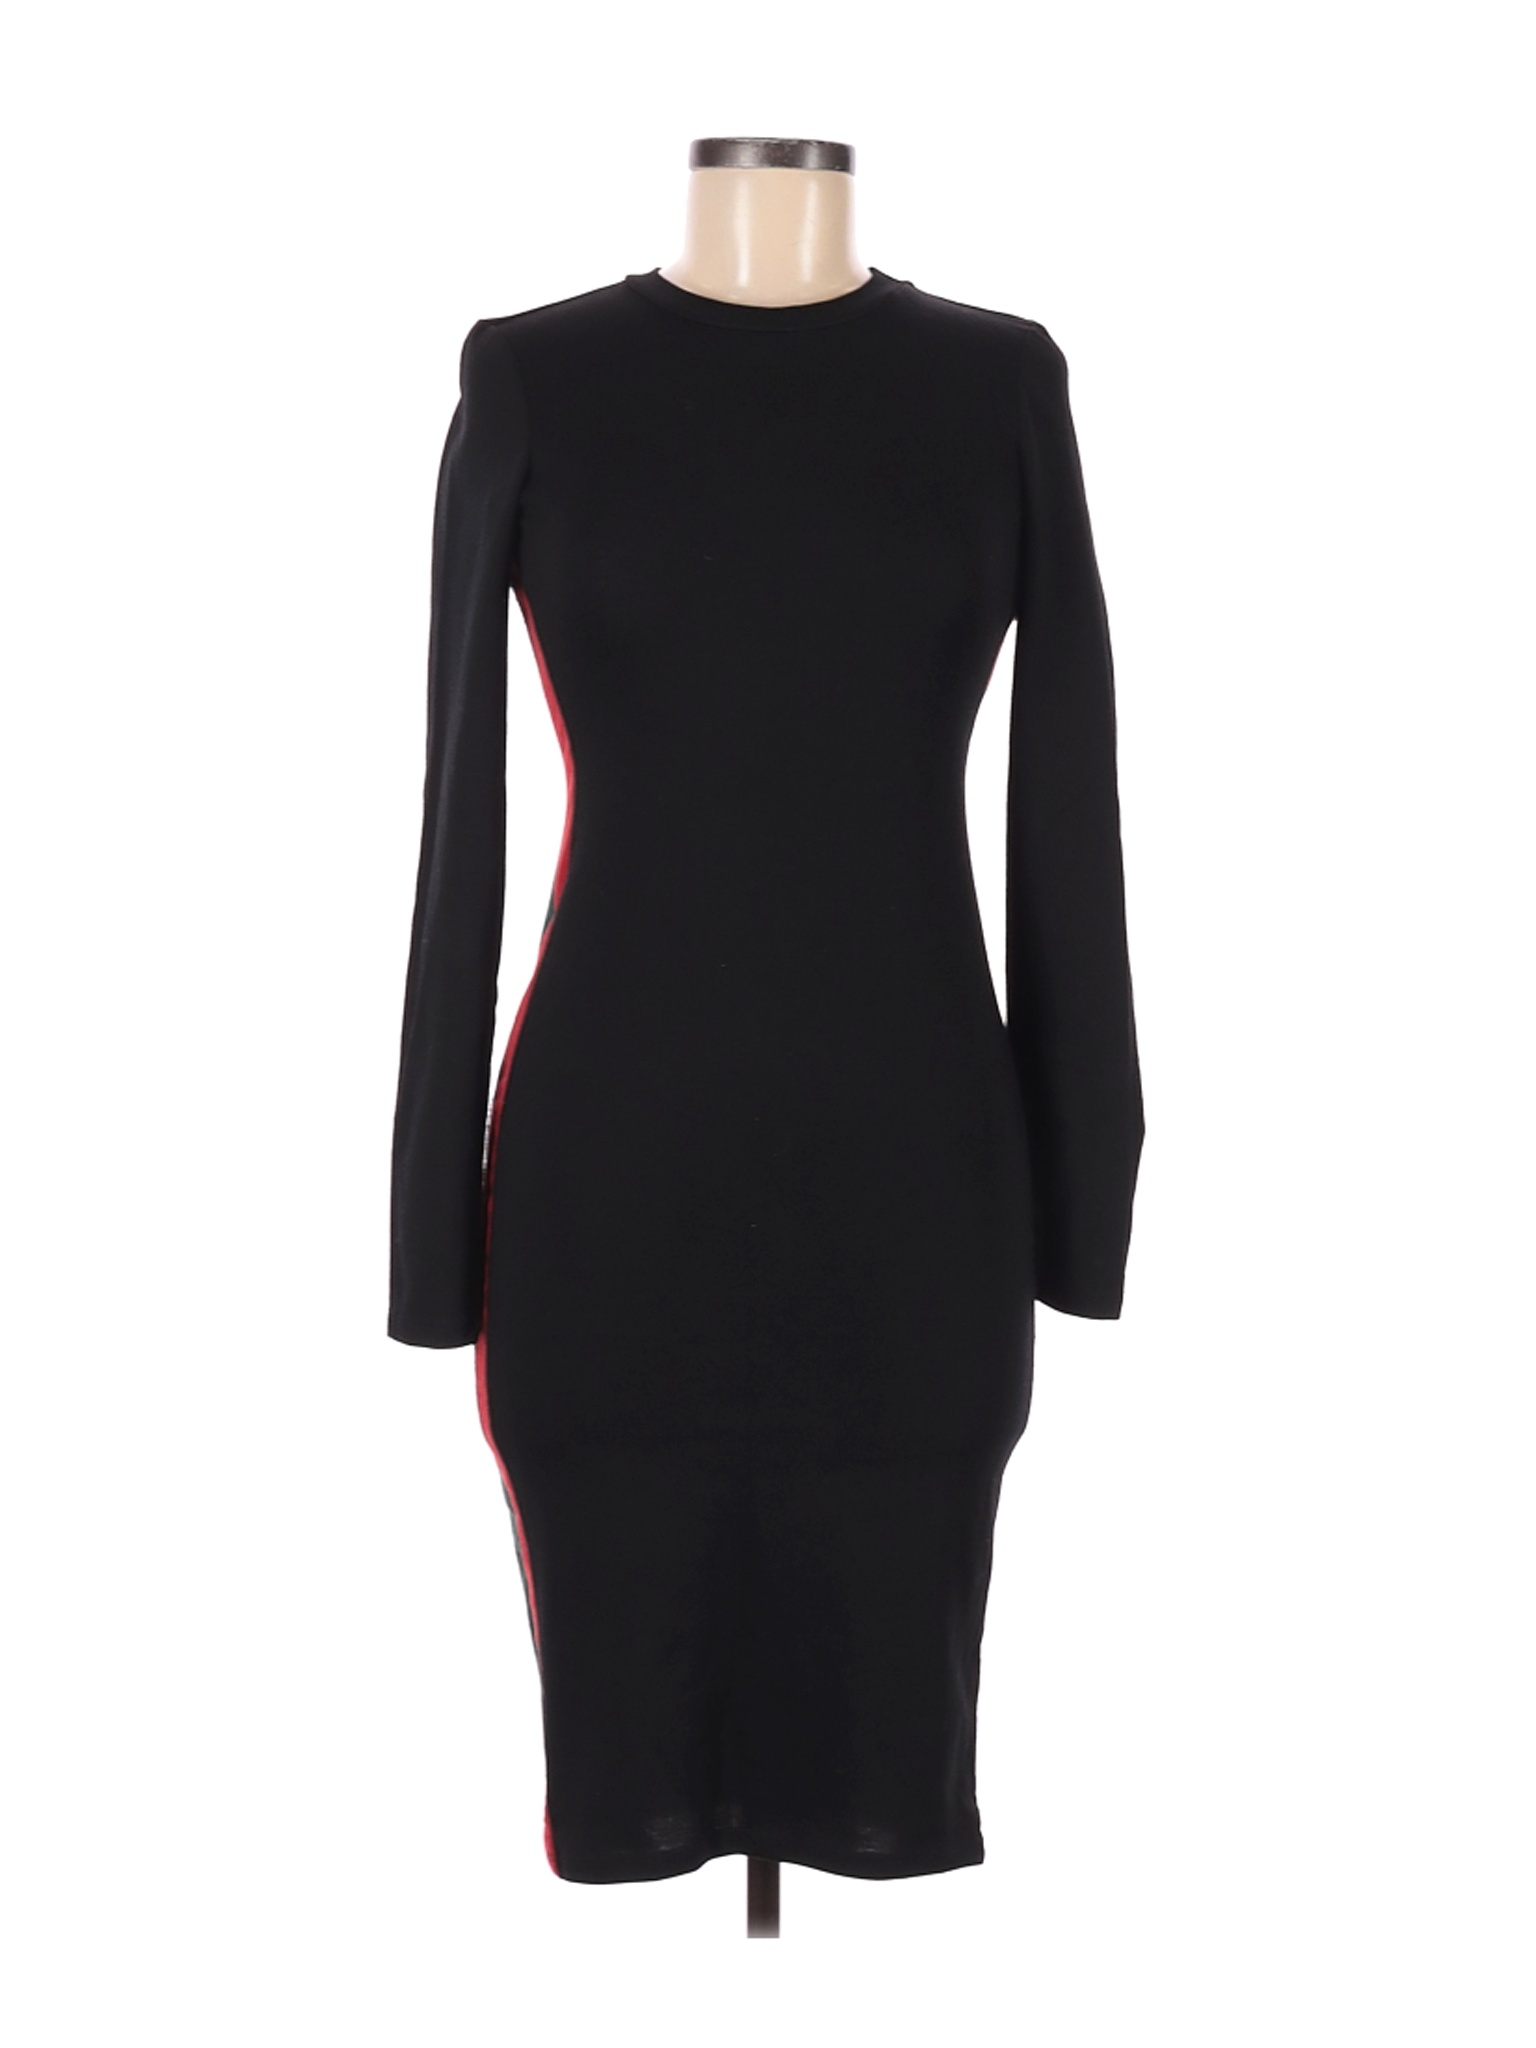 Trafaluc by Zara Women Black Casual Dress S | eBay